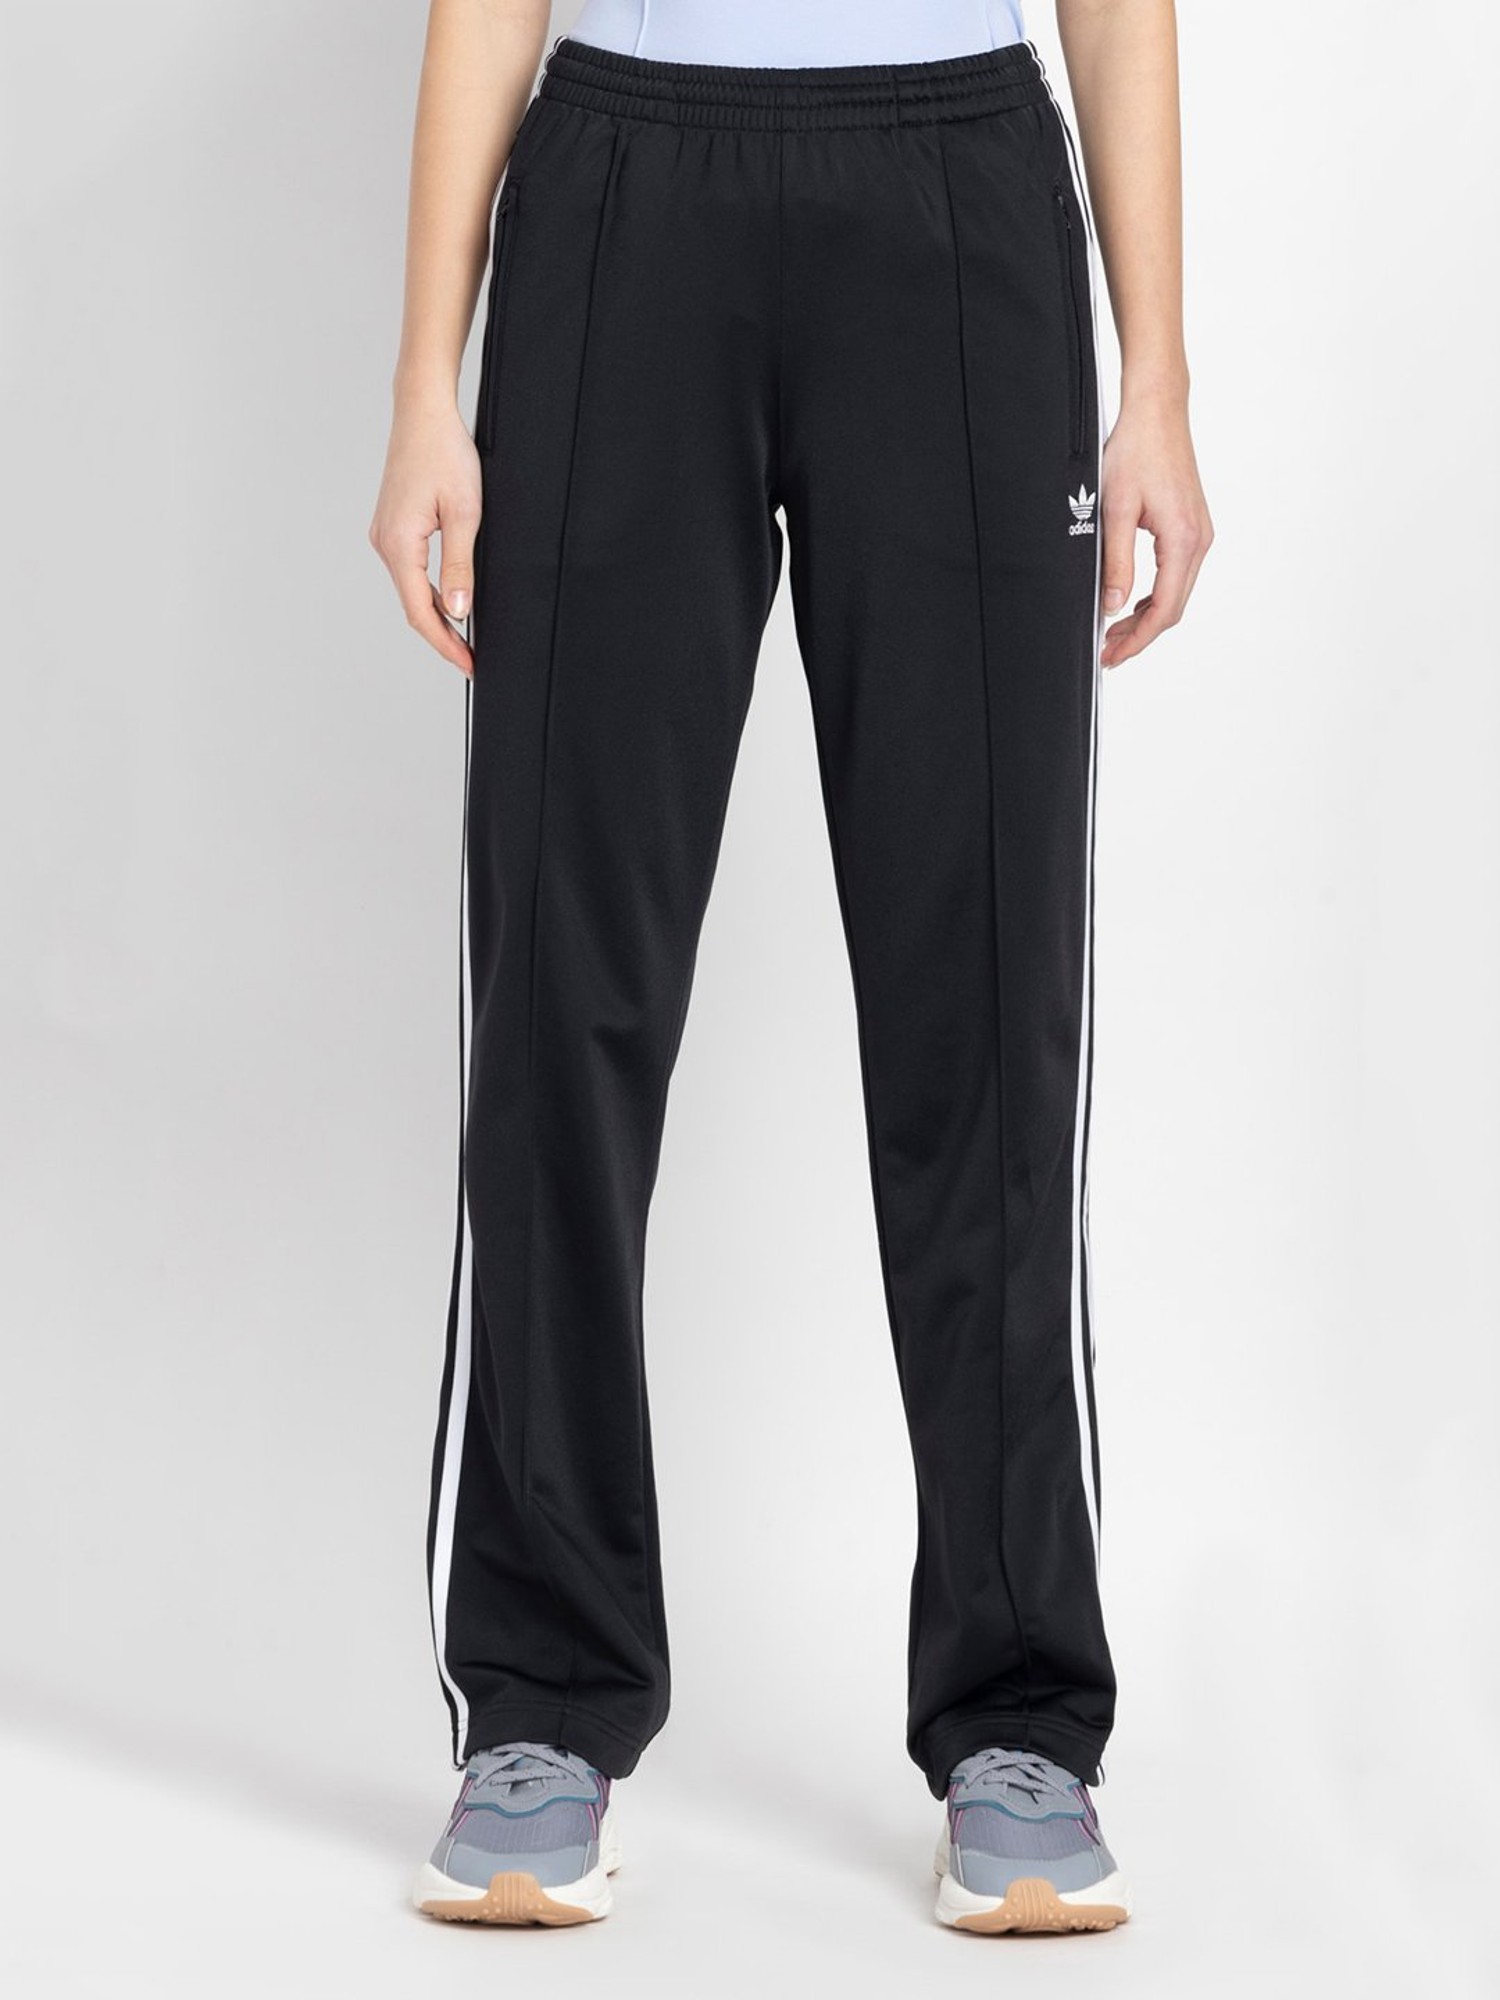 Buy Adidas Black W Zne P Pb Rdy Track Pants for Women's Online @ Tata CLiQ